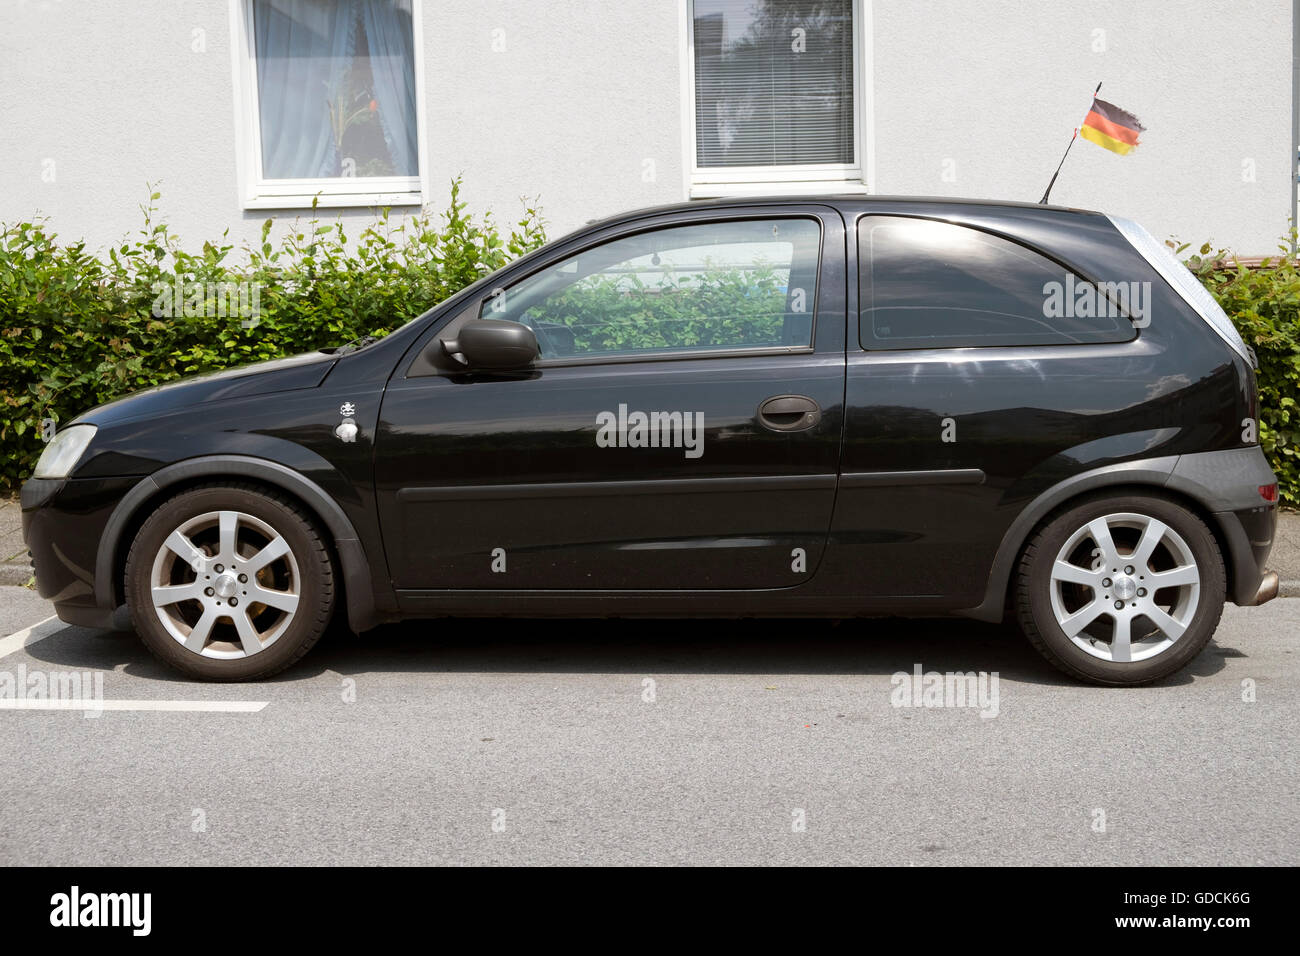 Opel Corsa car, Leichlingen, North Rhine-Westphalia, Germany. Stock Photo